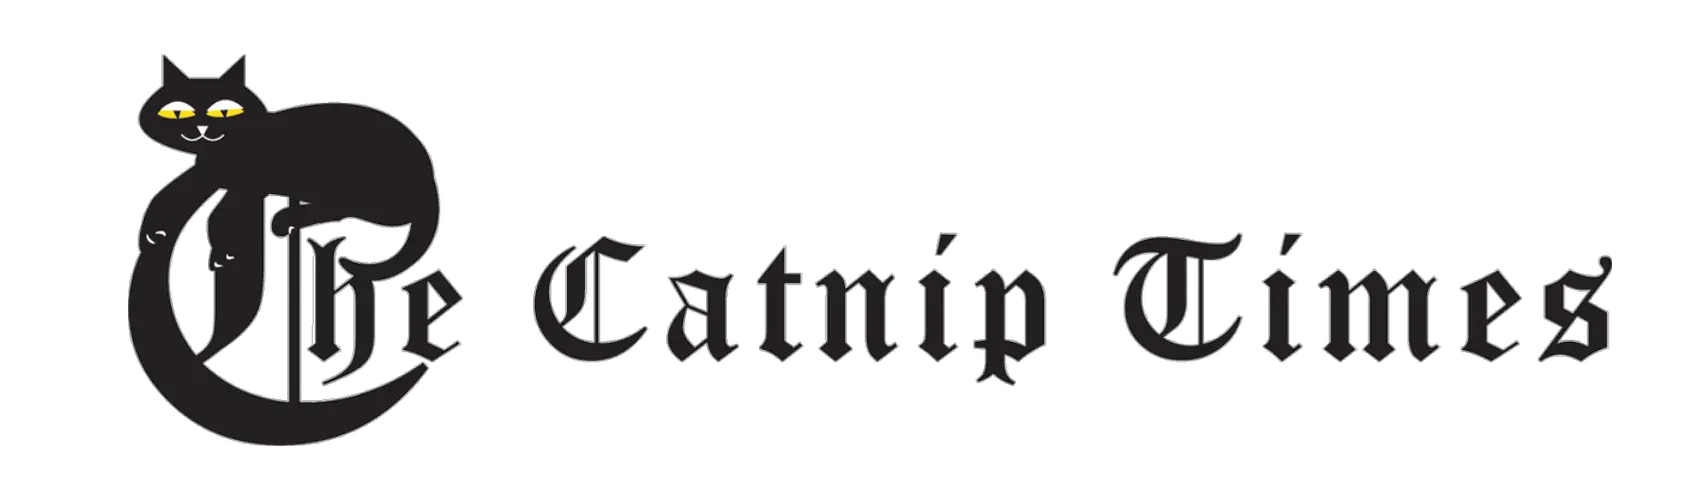 The Catnip Times' Logo